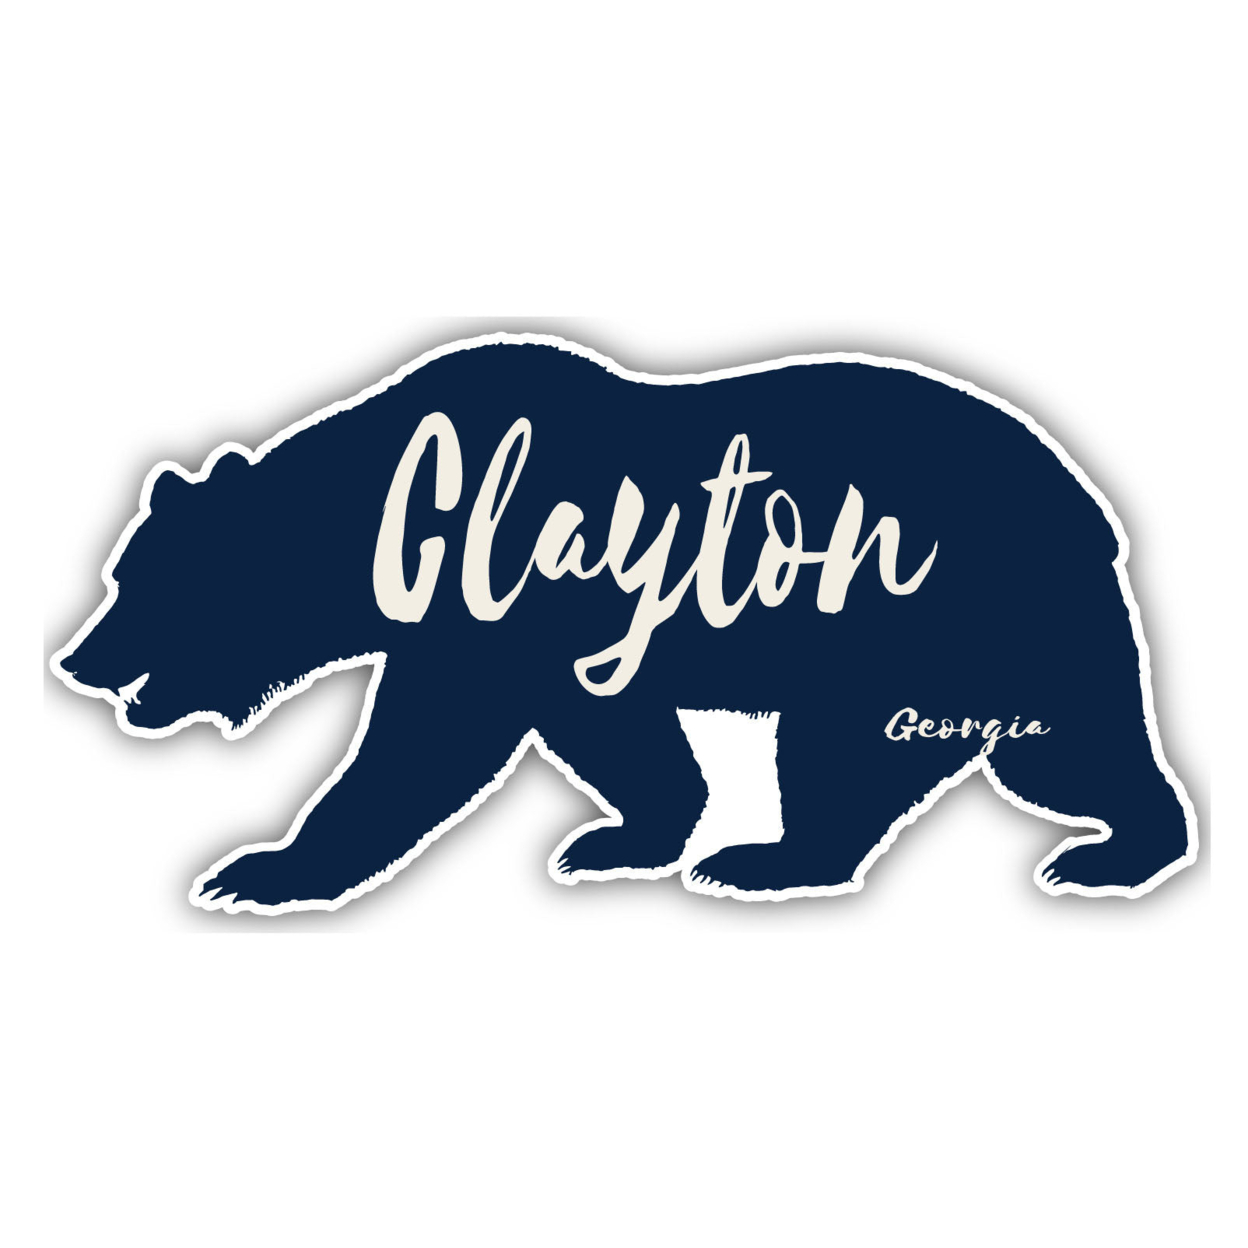 Clayton Georgia Souvenir Decorative Stickers (Choose Theme And Size) - 4-Pack, 12-Inch, Bear